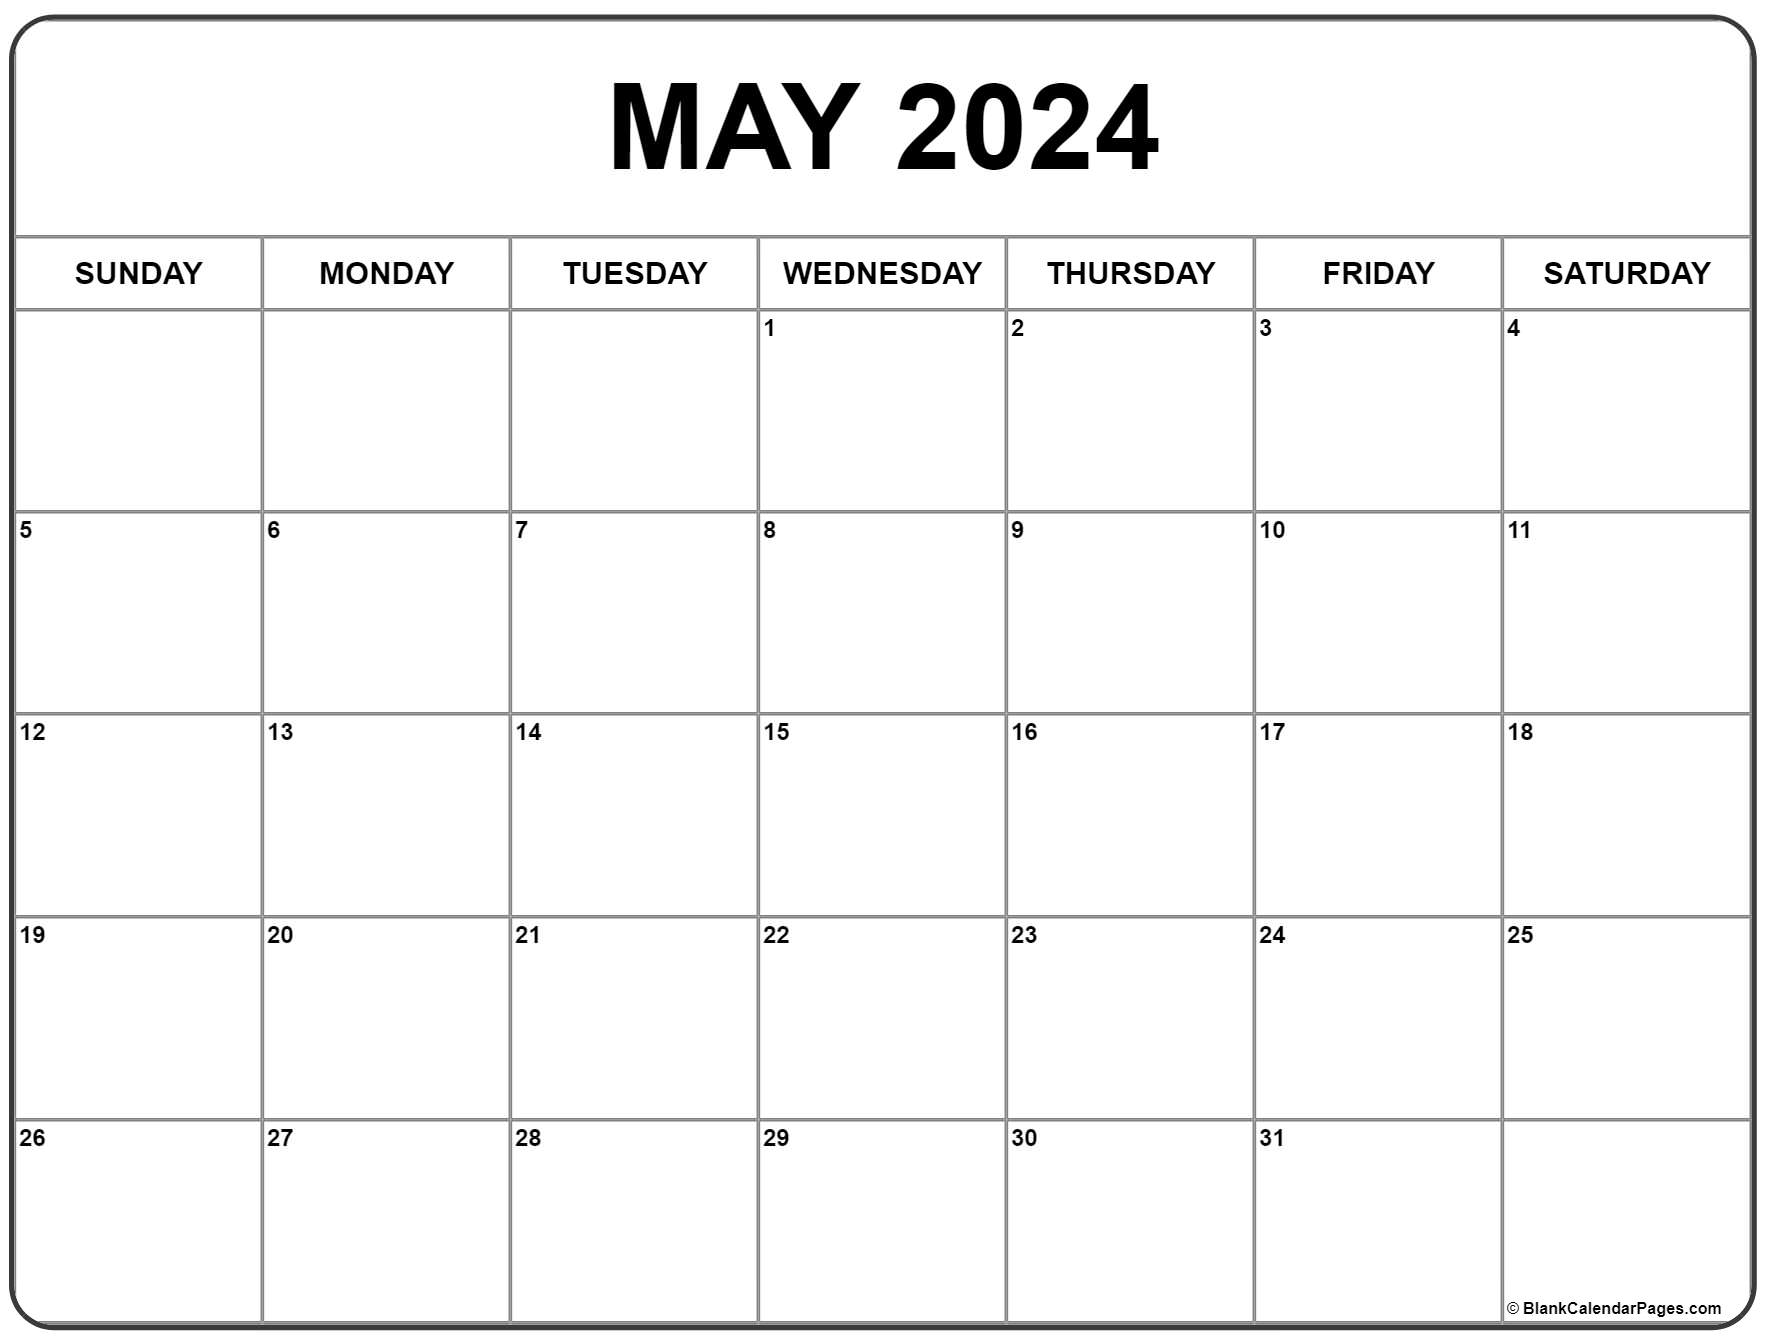 May 2024 Calendar | Free Printable Calendar for Calendar 2024 Printable May